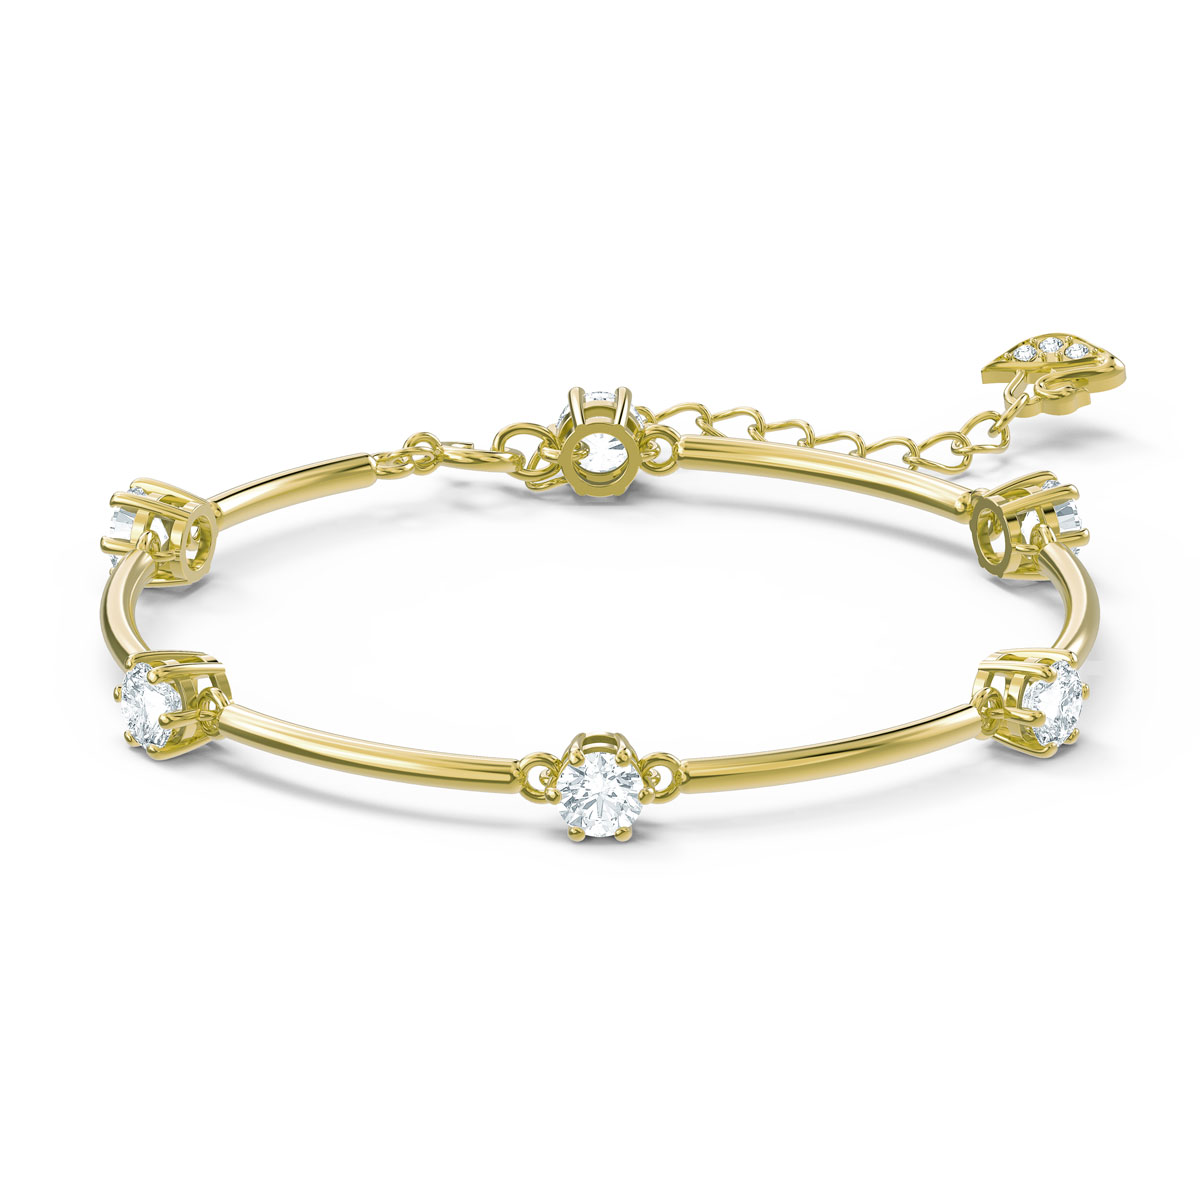 Swarovski Constella Bracelet, White, Gold-Tone Plated